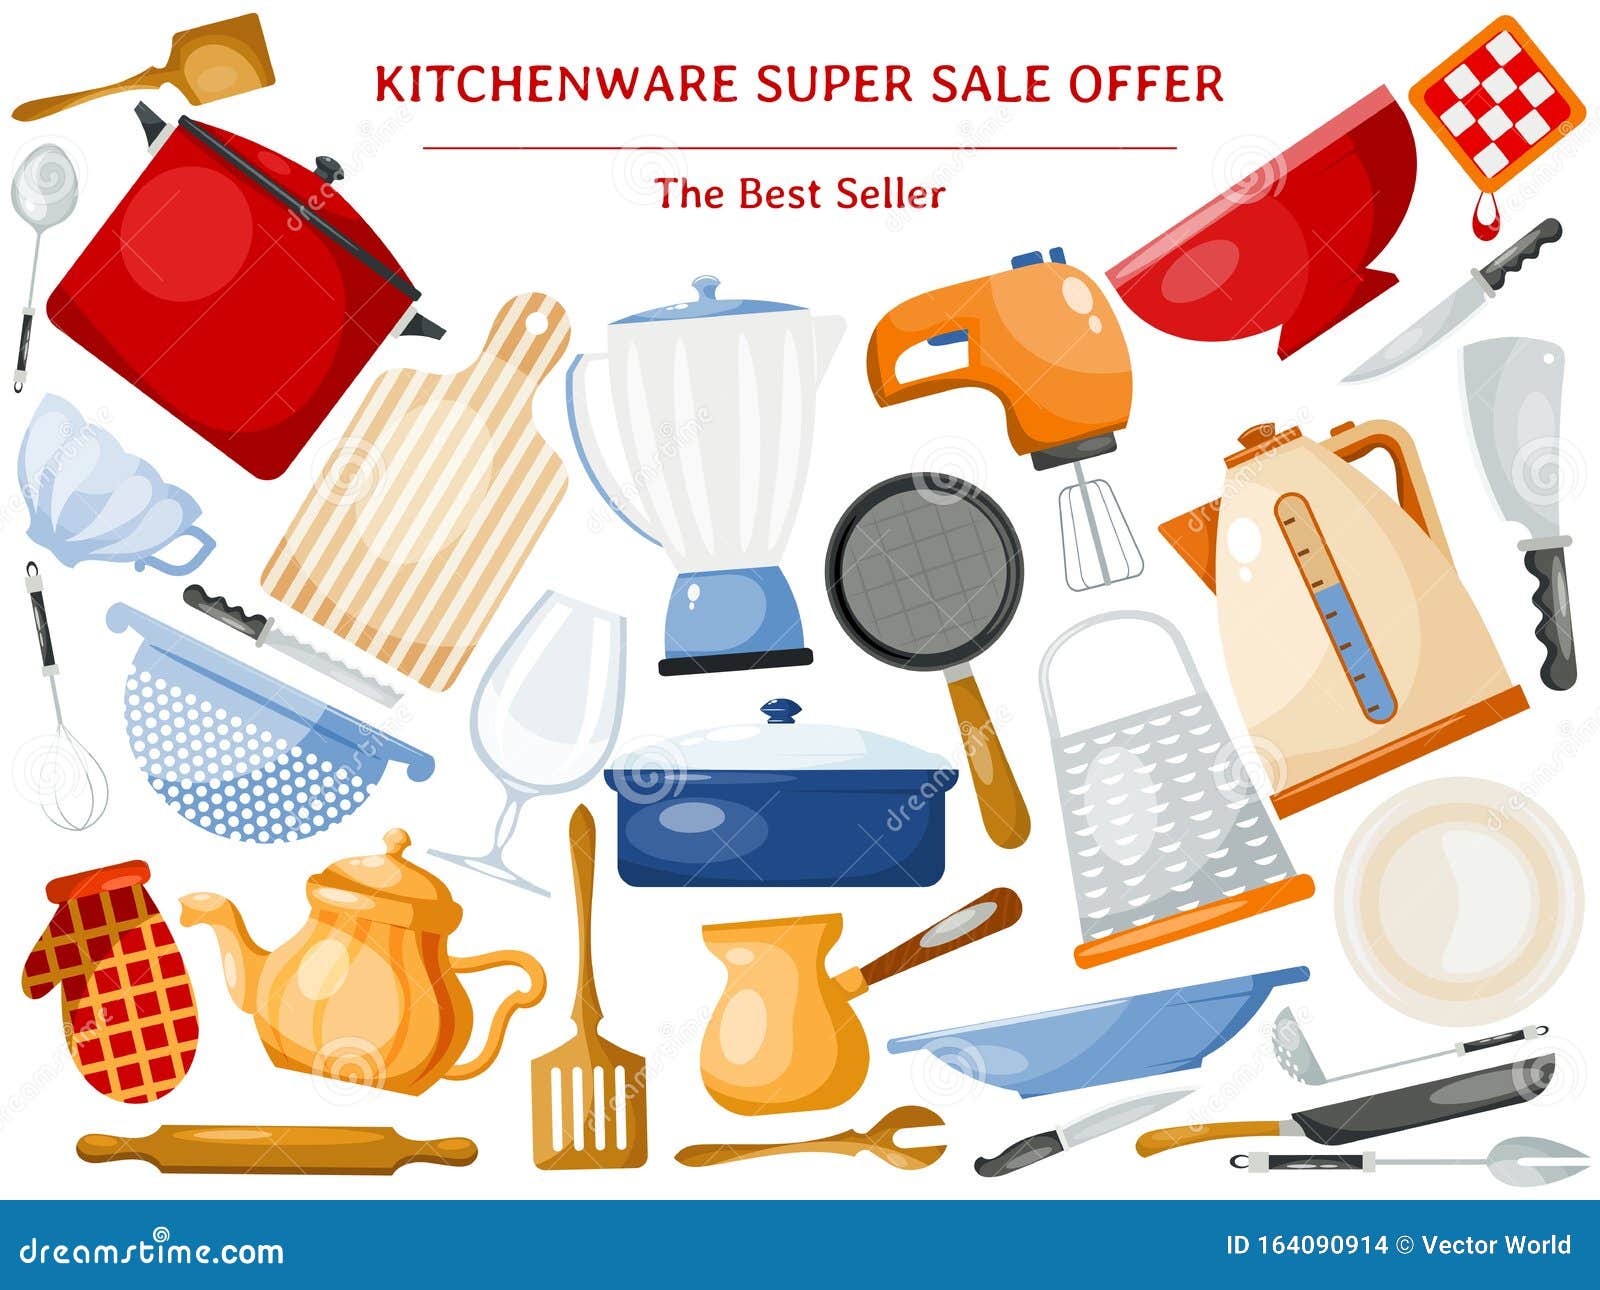 Kitchenware Sales Stock Illustrations – 20 Kitchenware Sales Stock ...